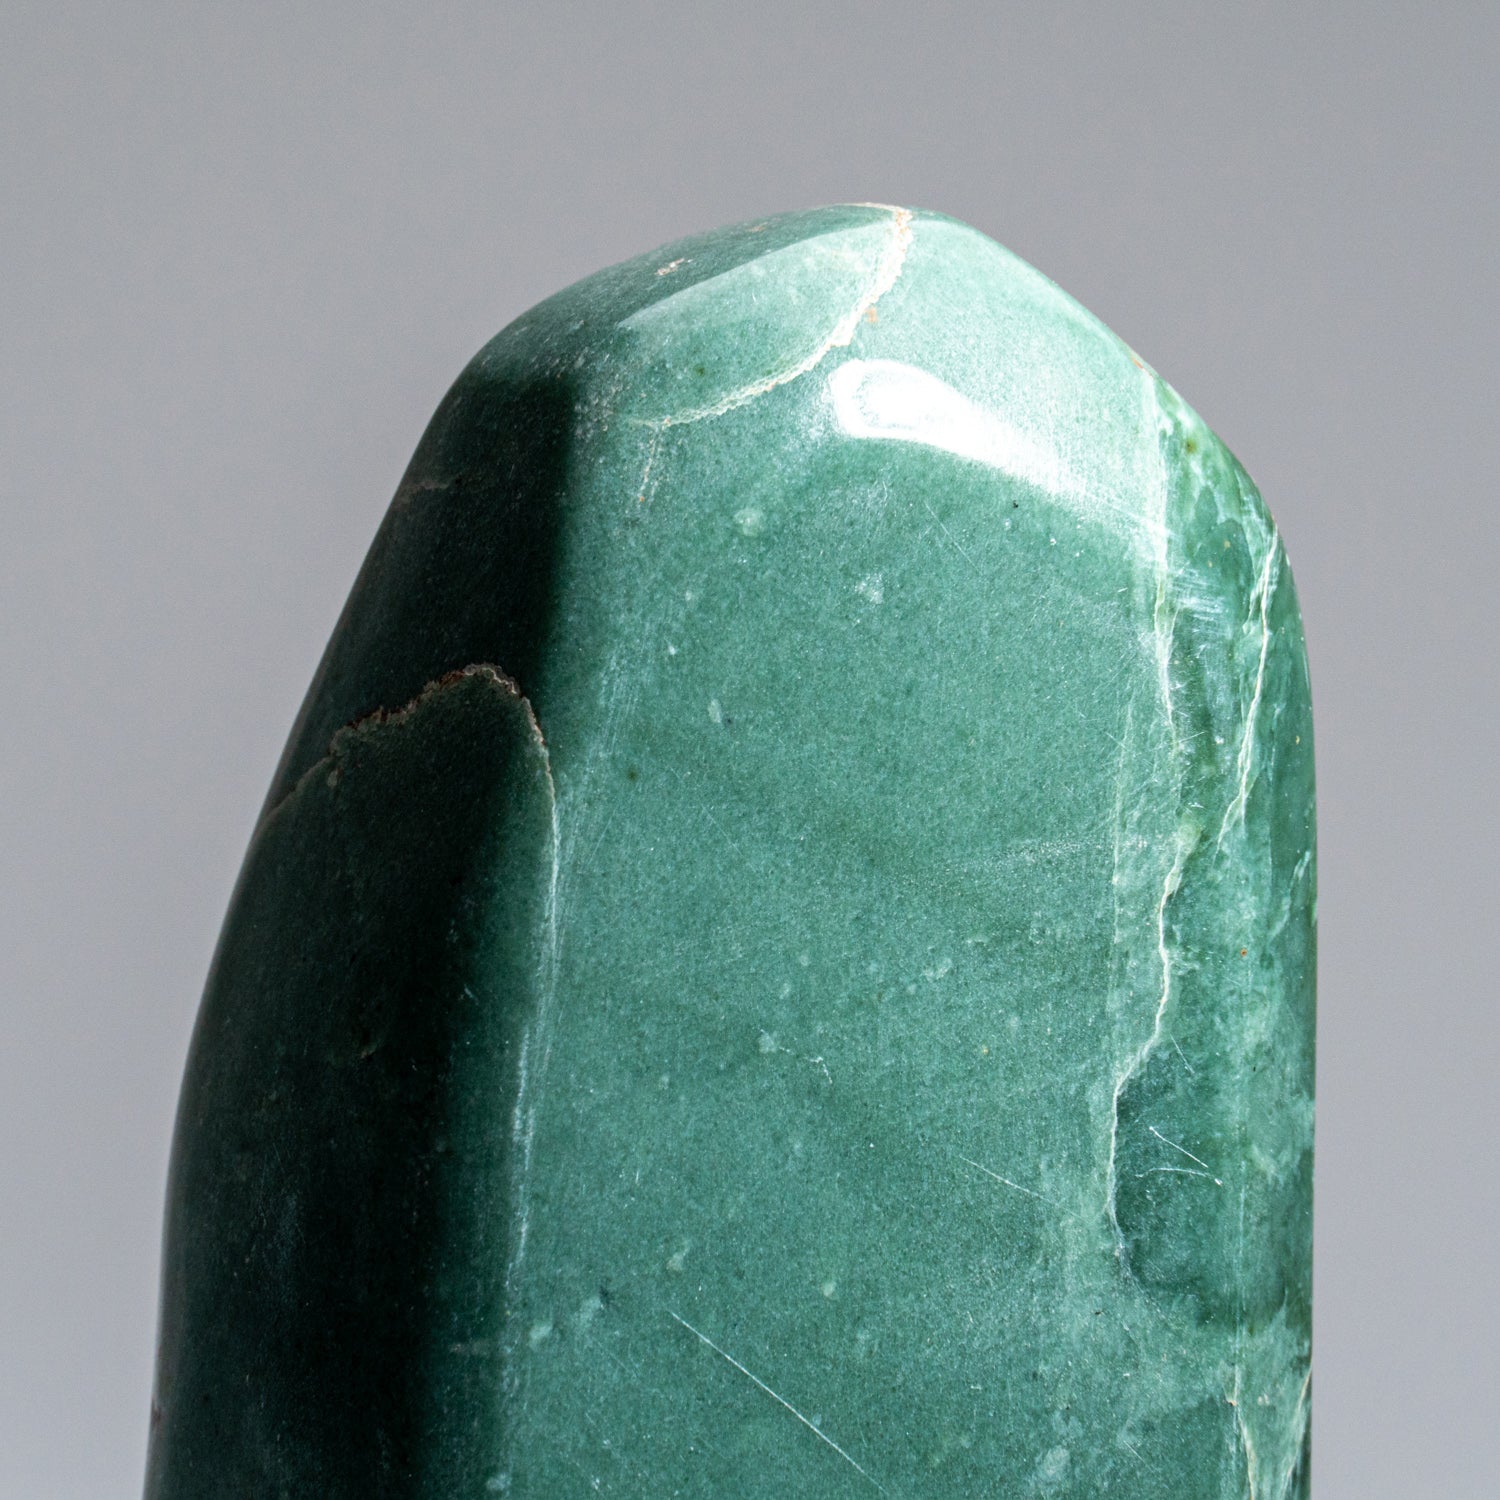 Polished Nephrite Jade Freeform from Pakistan (511.8 grams)